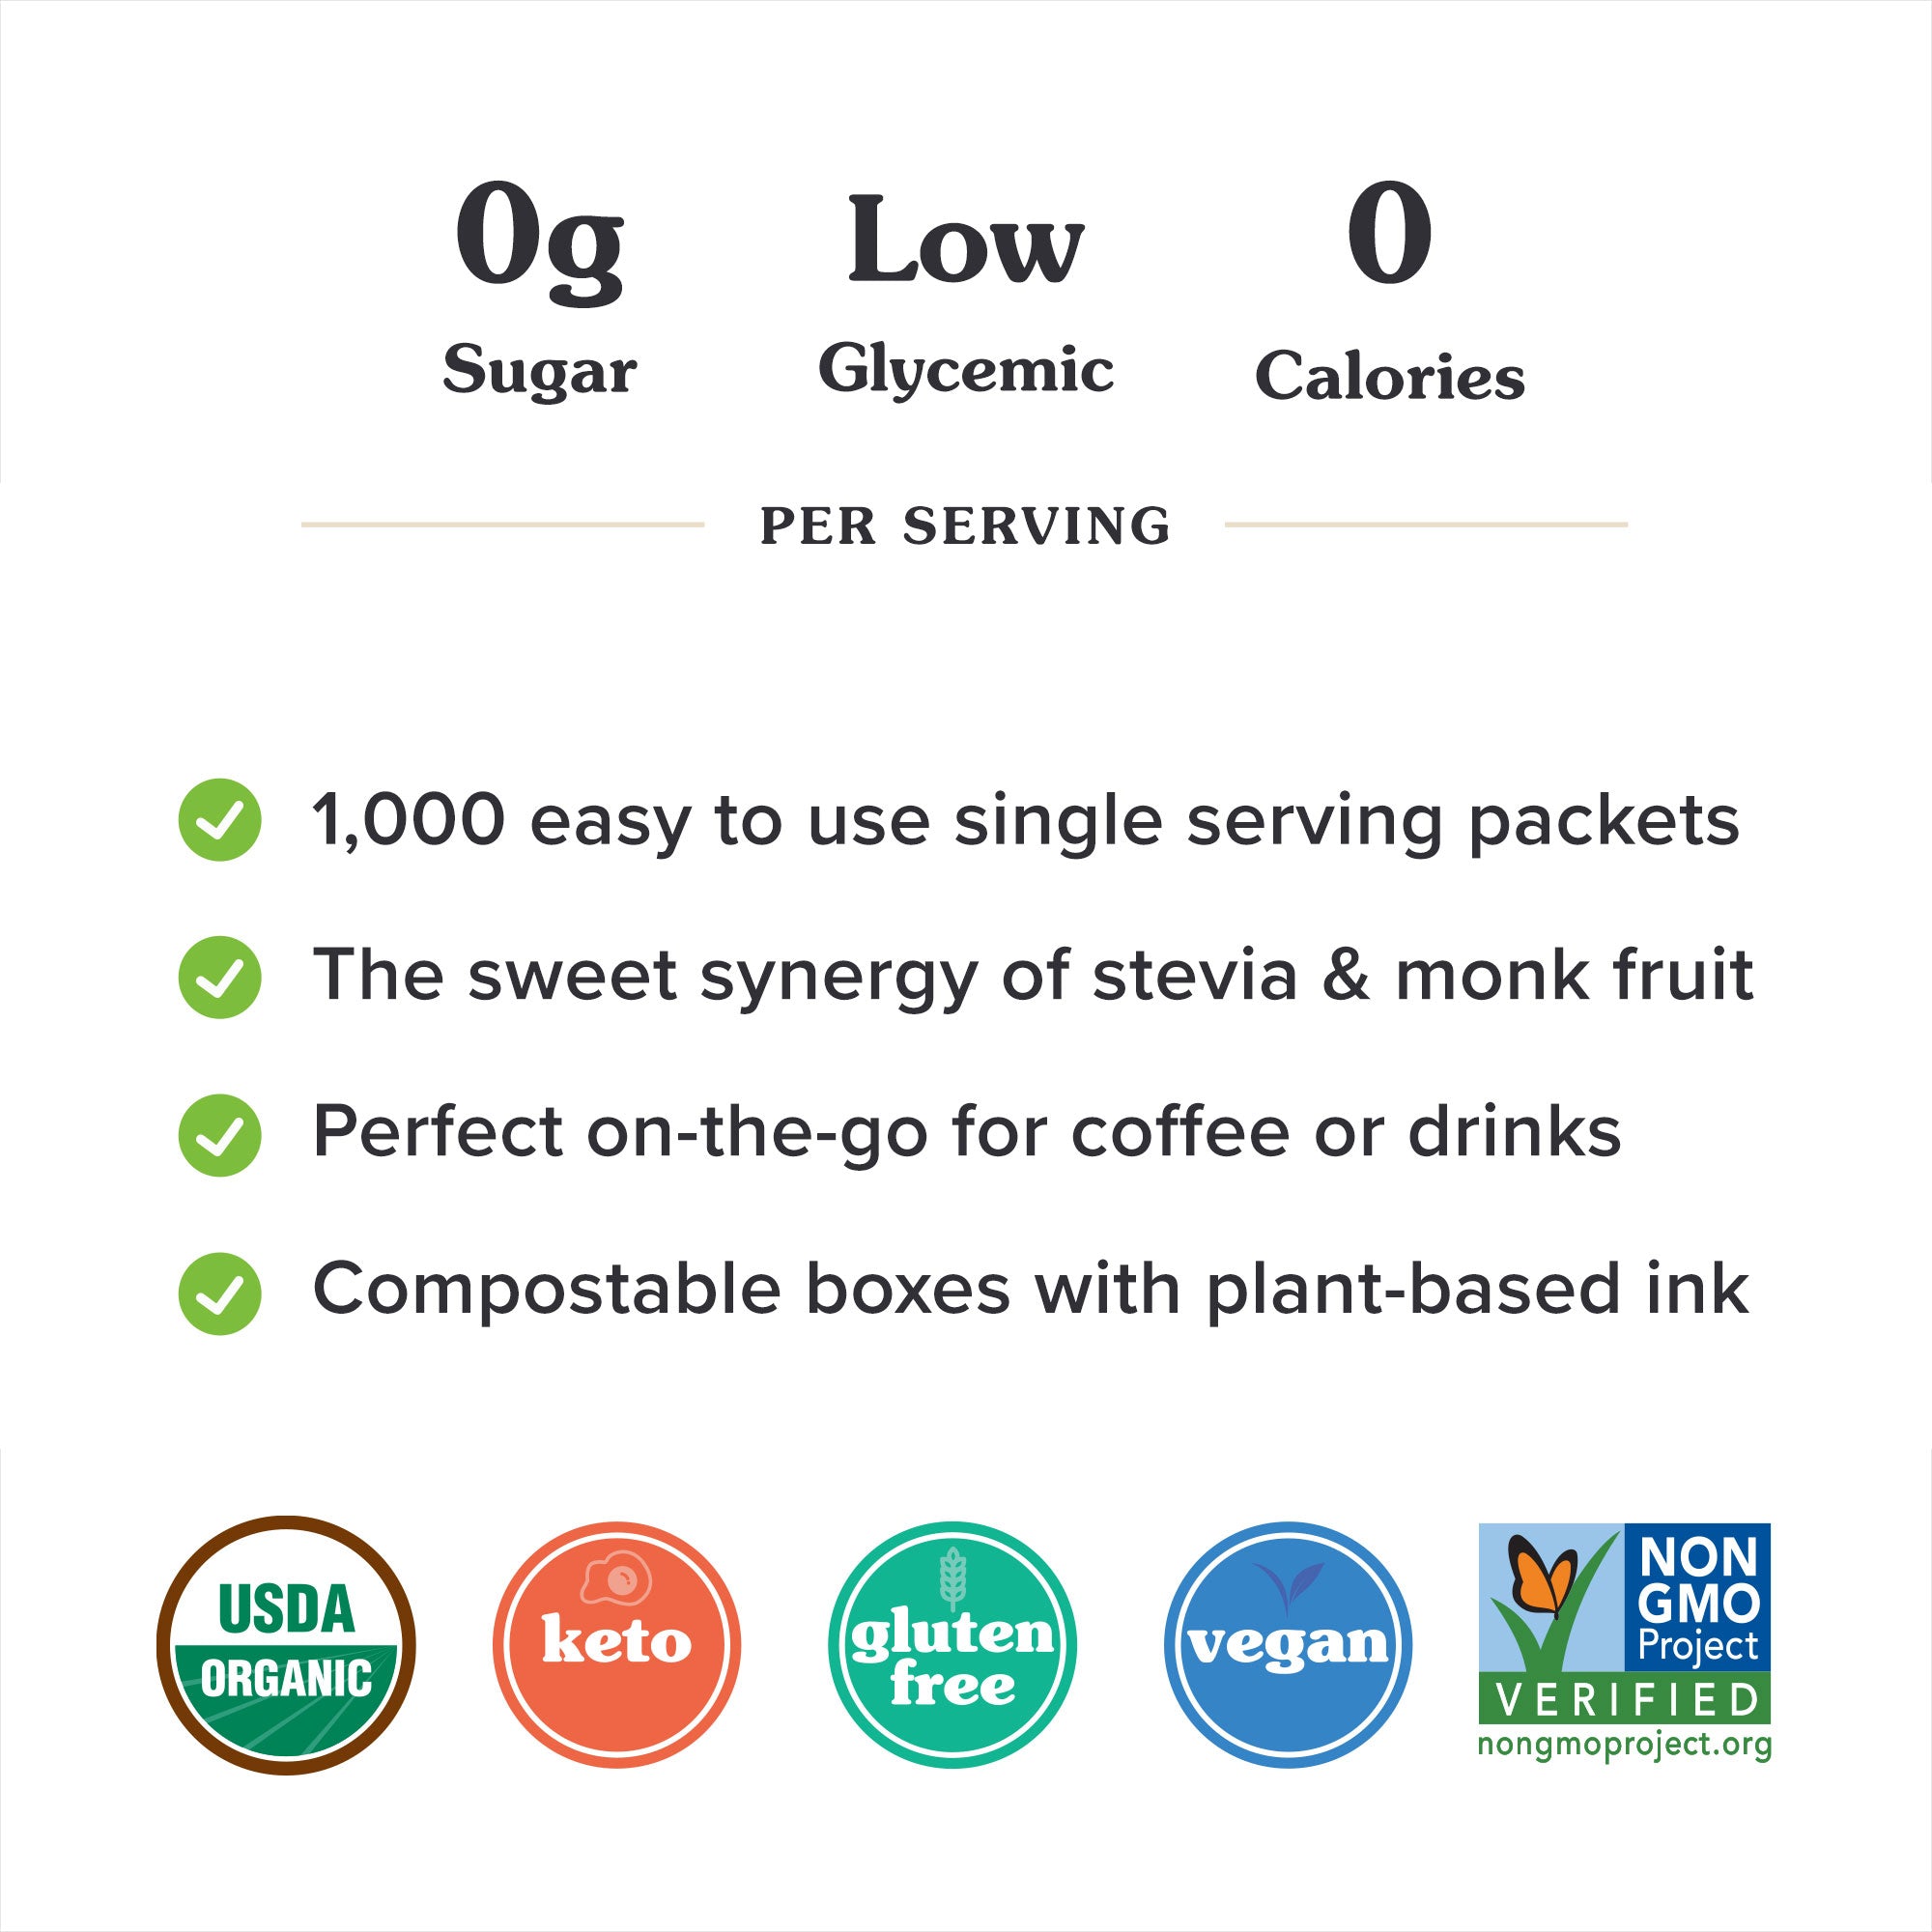 Organic Sweetener Stevia & Monk Fruit Packets